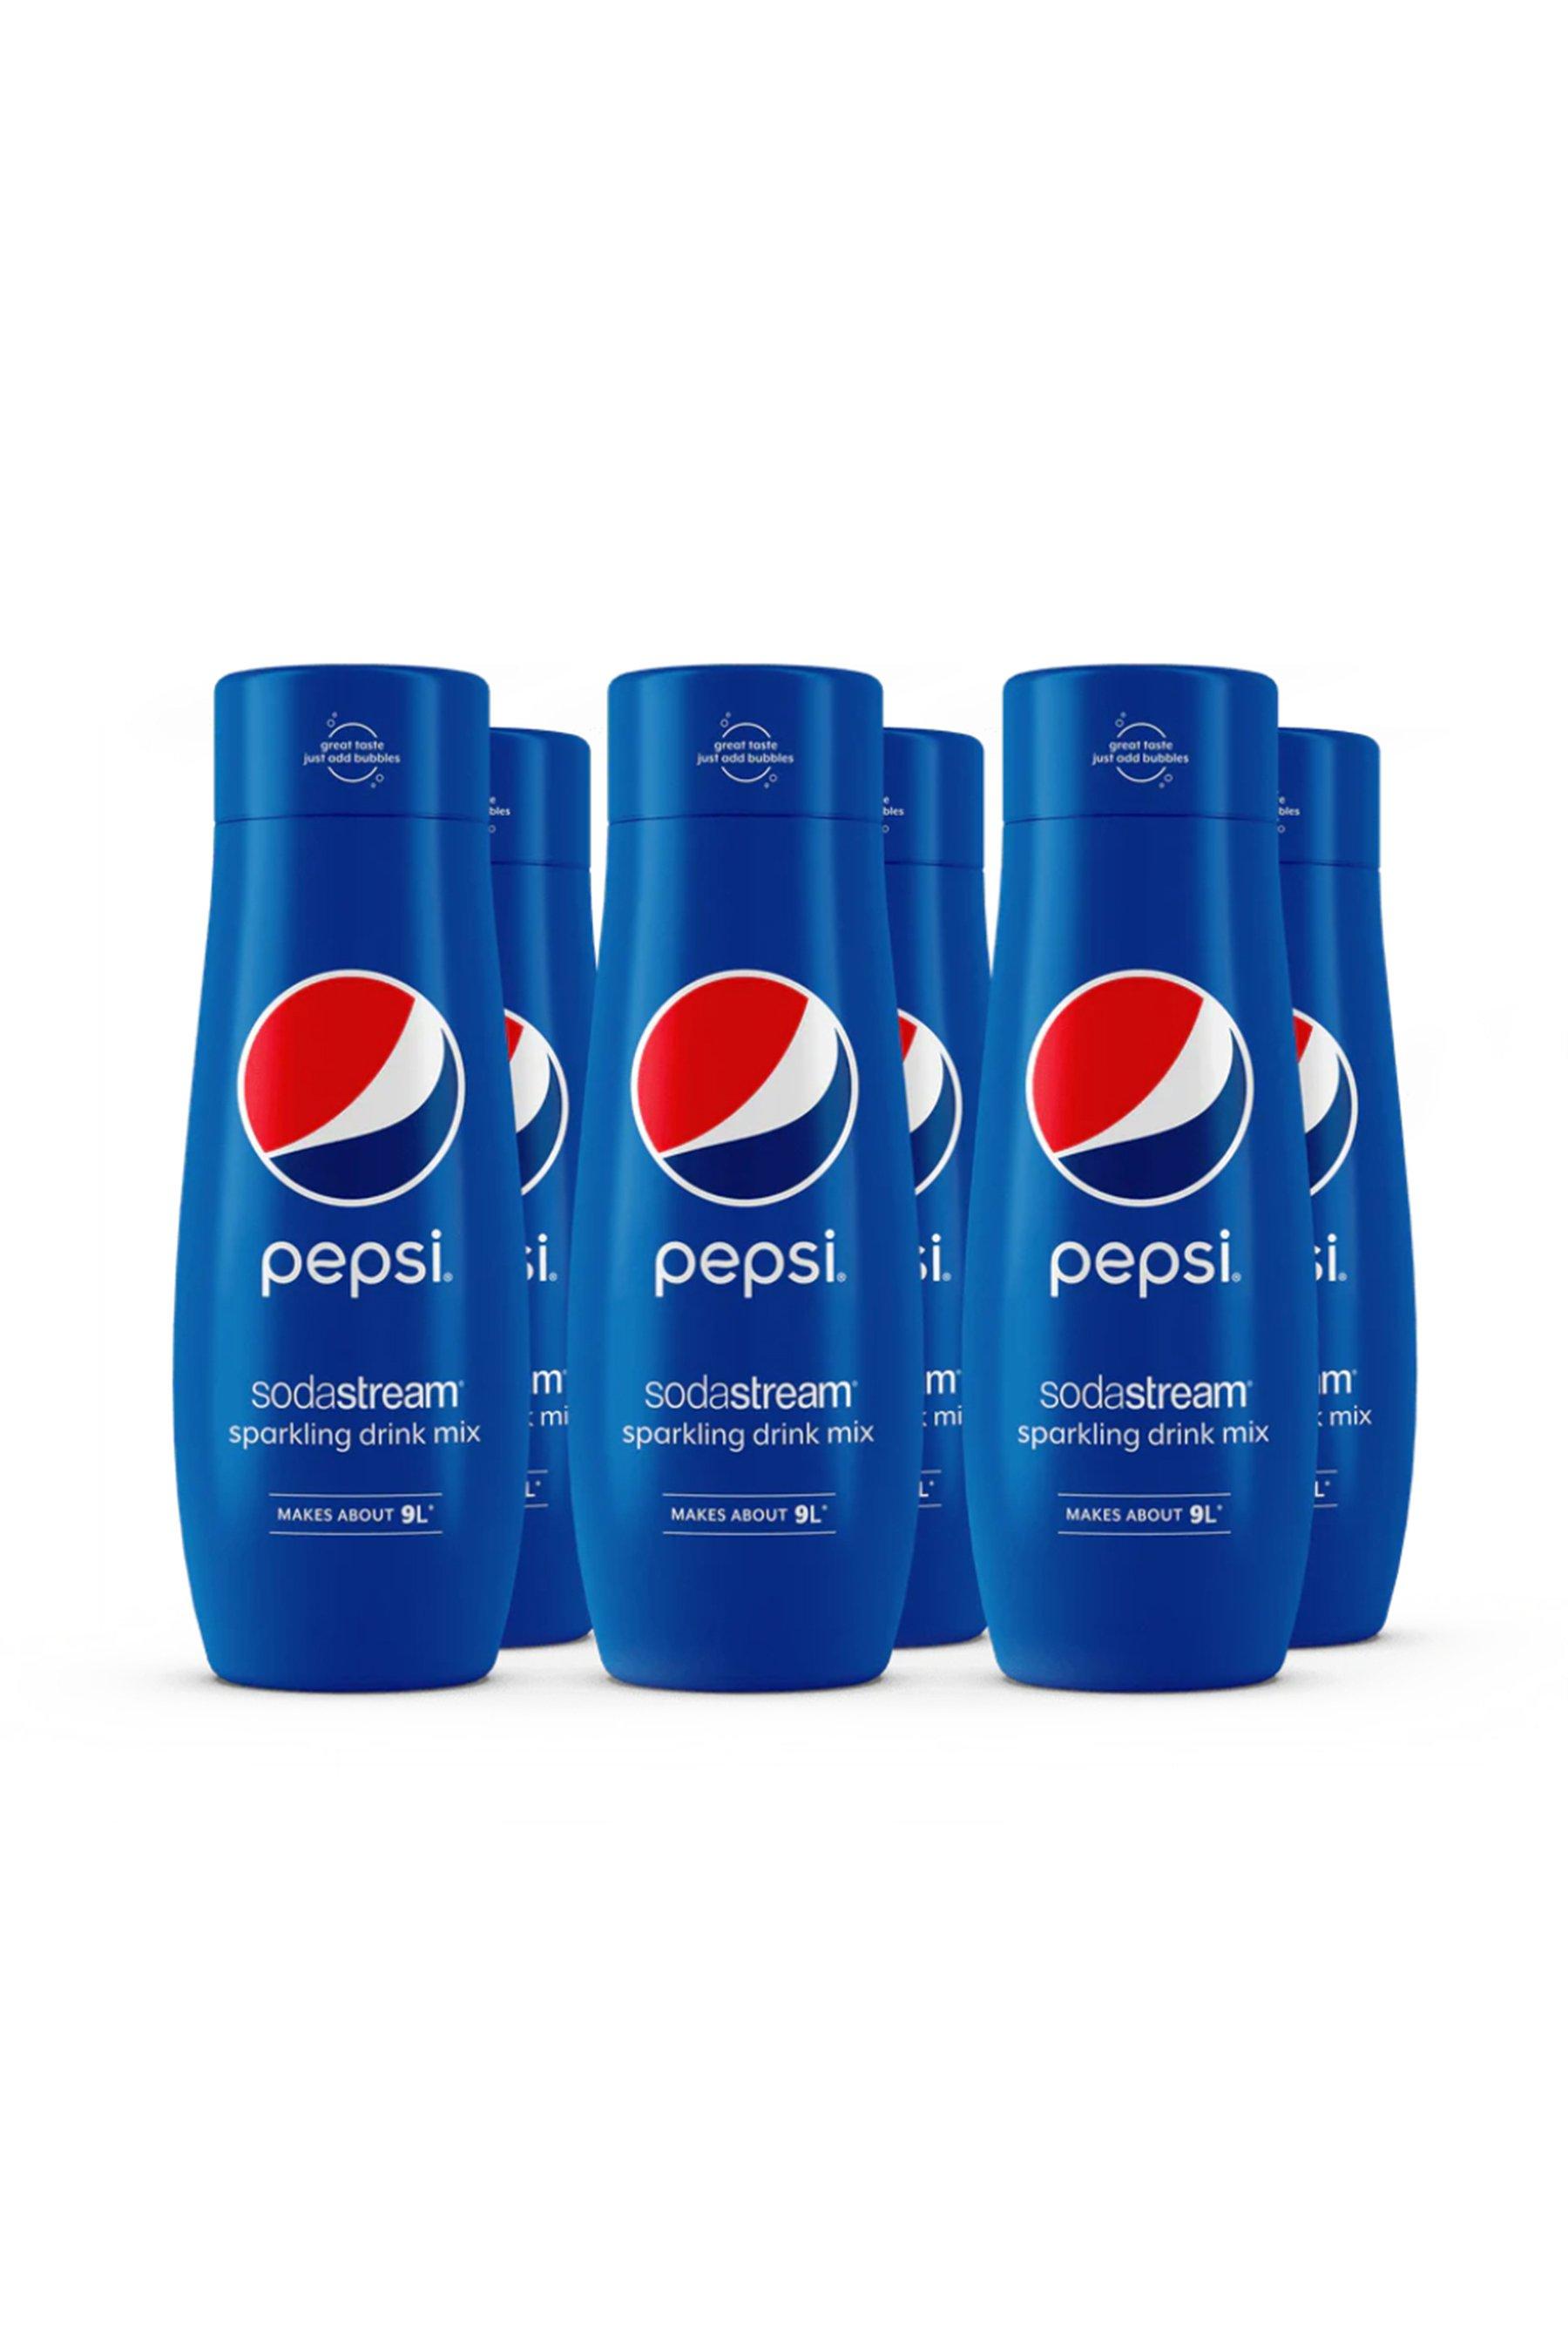 SodaStream X Pepsi - How To Flavour With Pepsi Max 